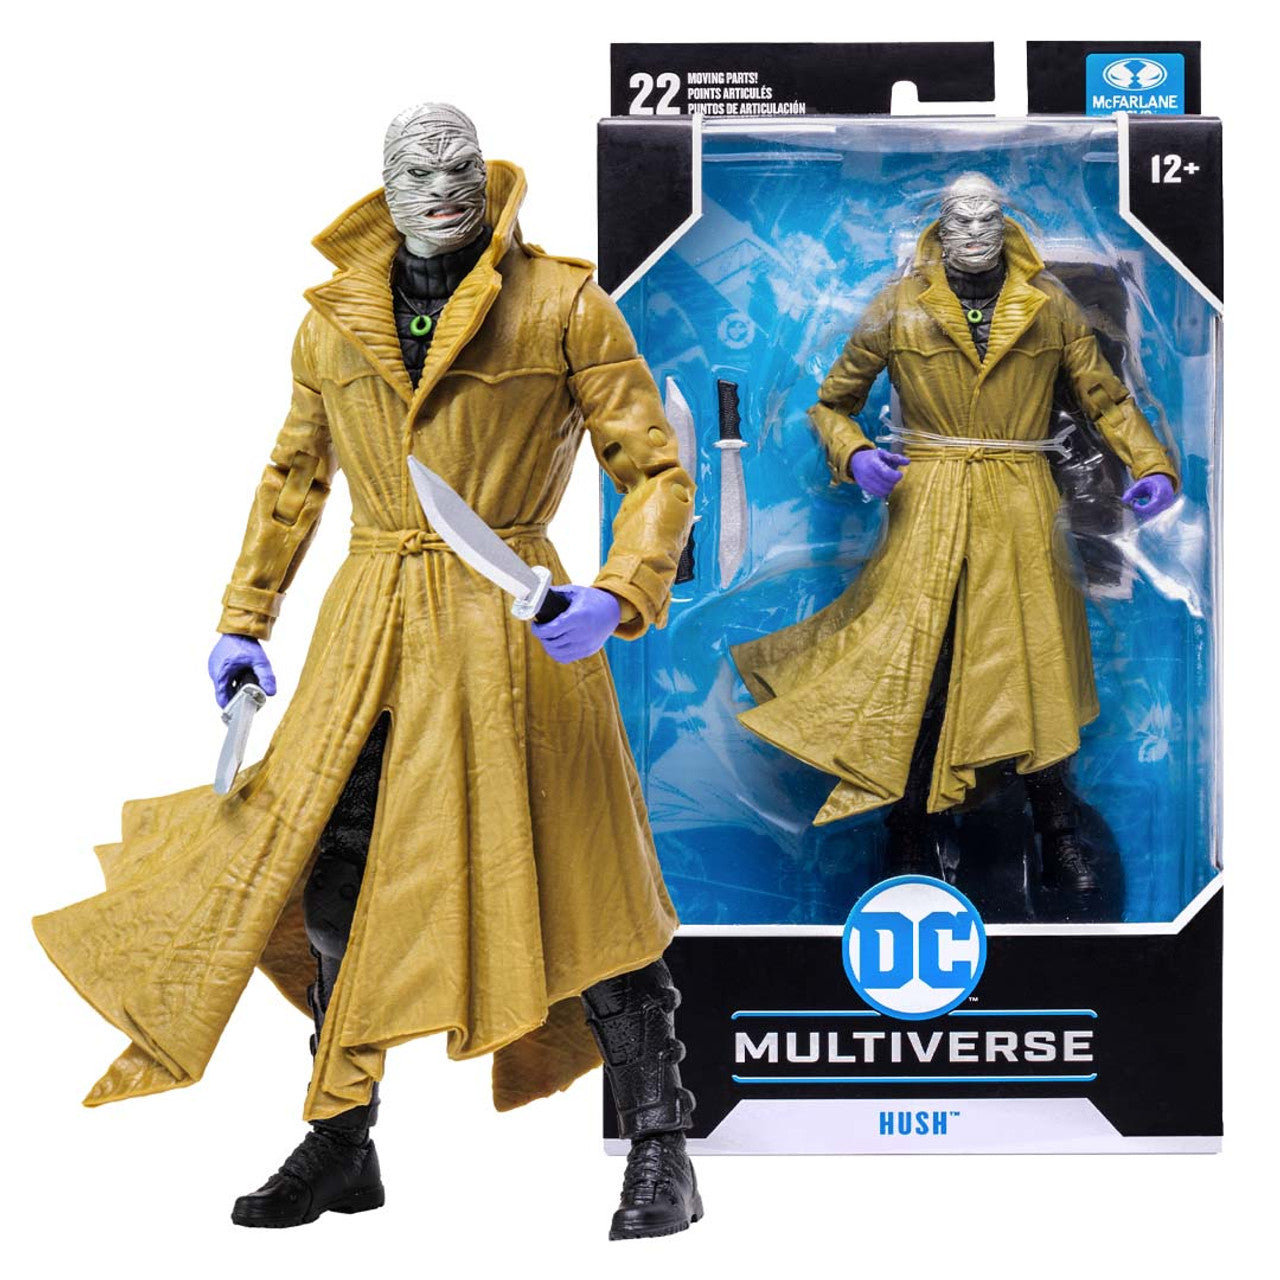 DC Multiverse Hush Action Figure